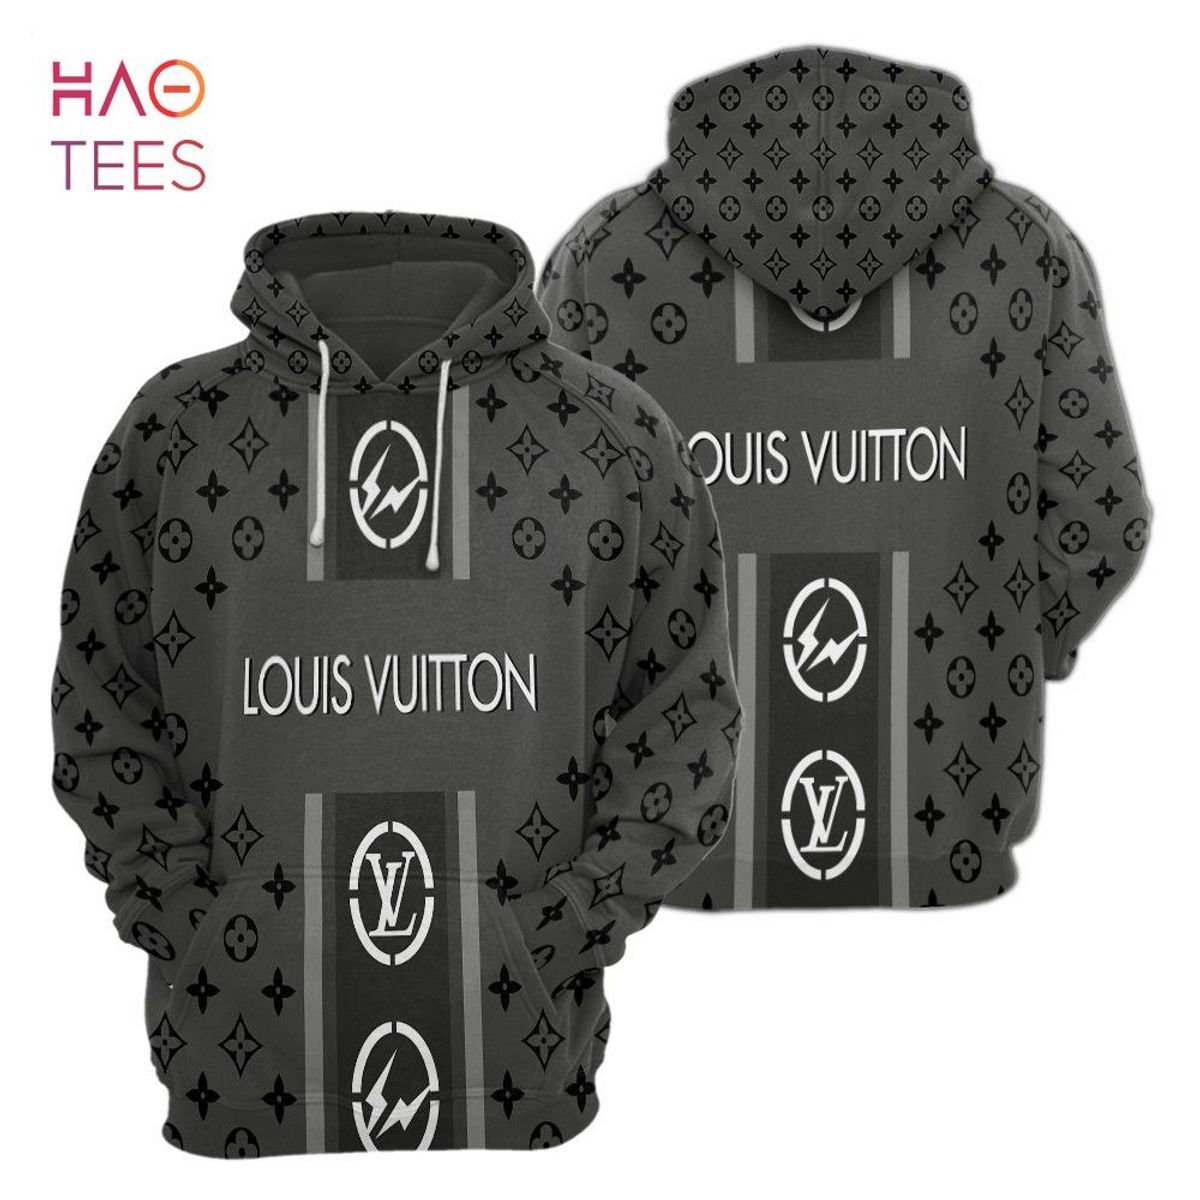 Available] Louis Vuitton Luxury Brand Hoodie Pants Pod Design